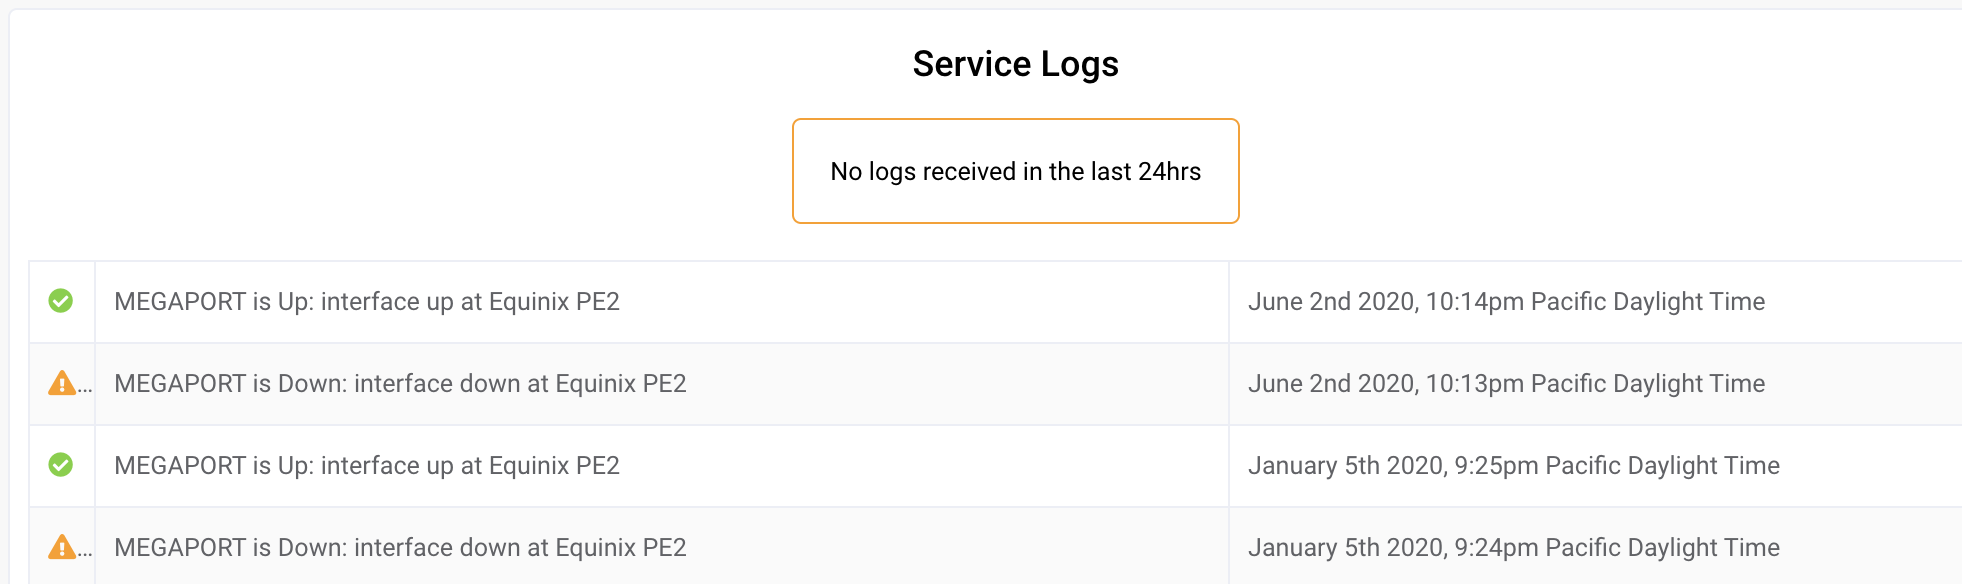 Service Logs page